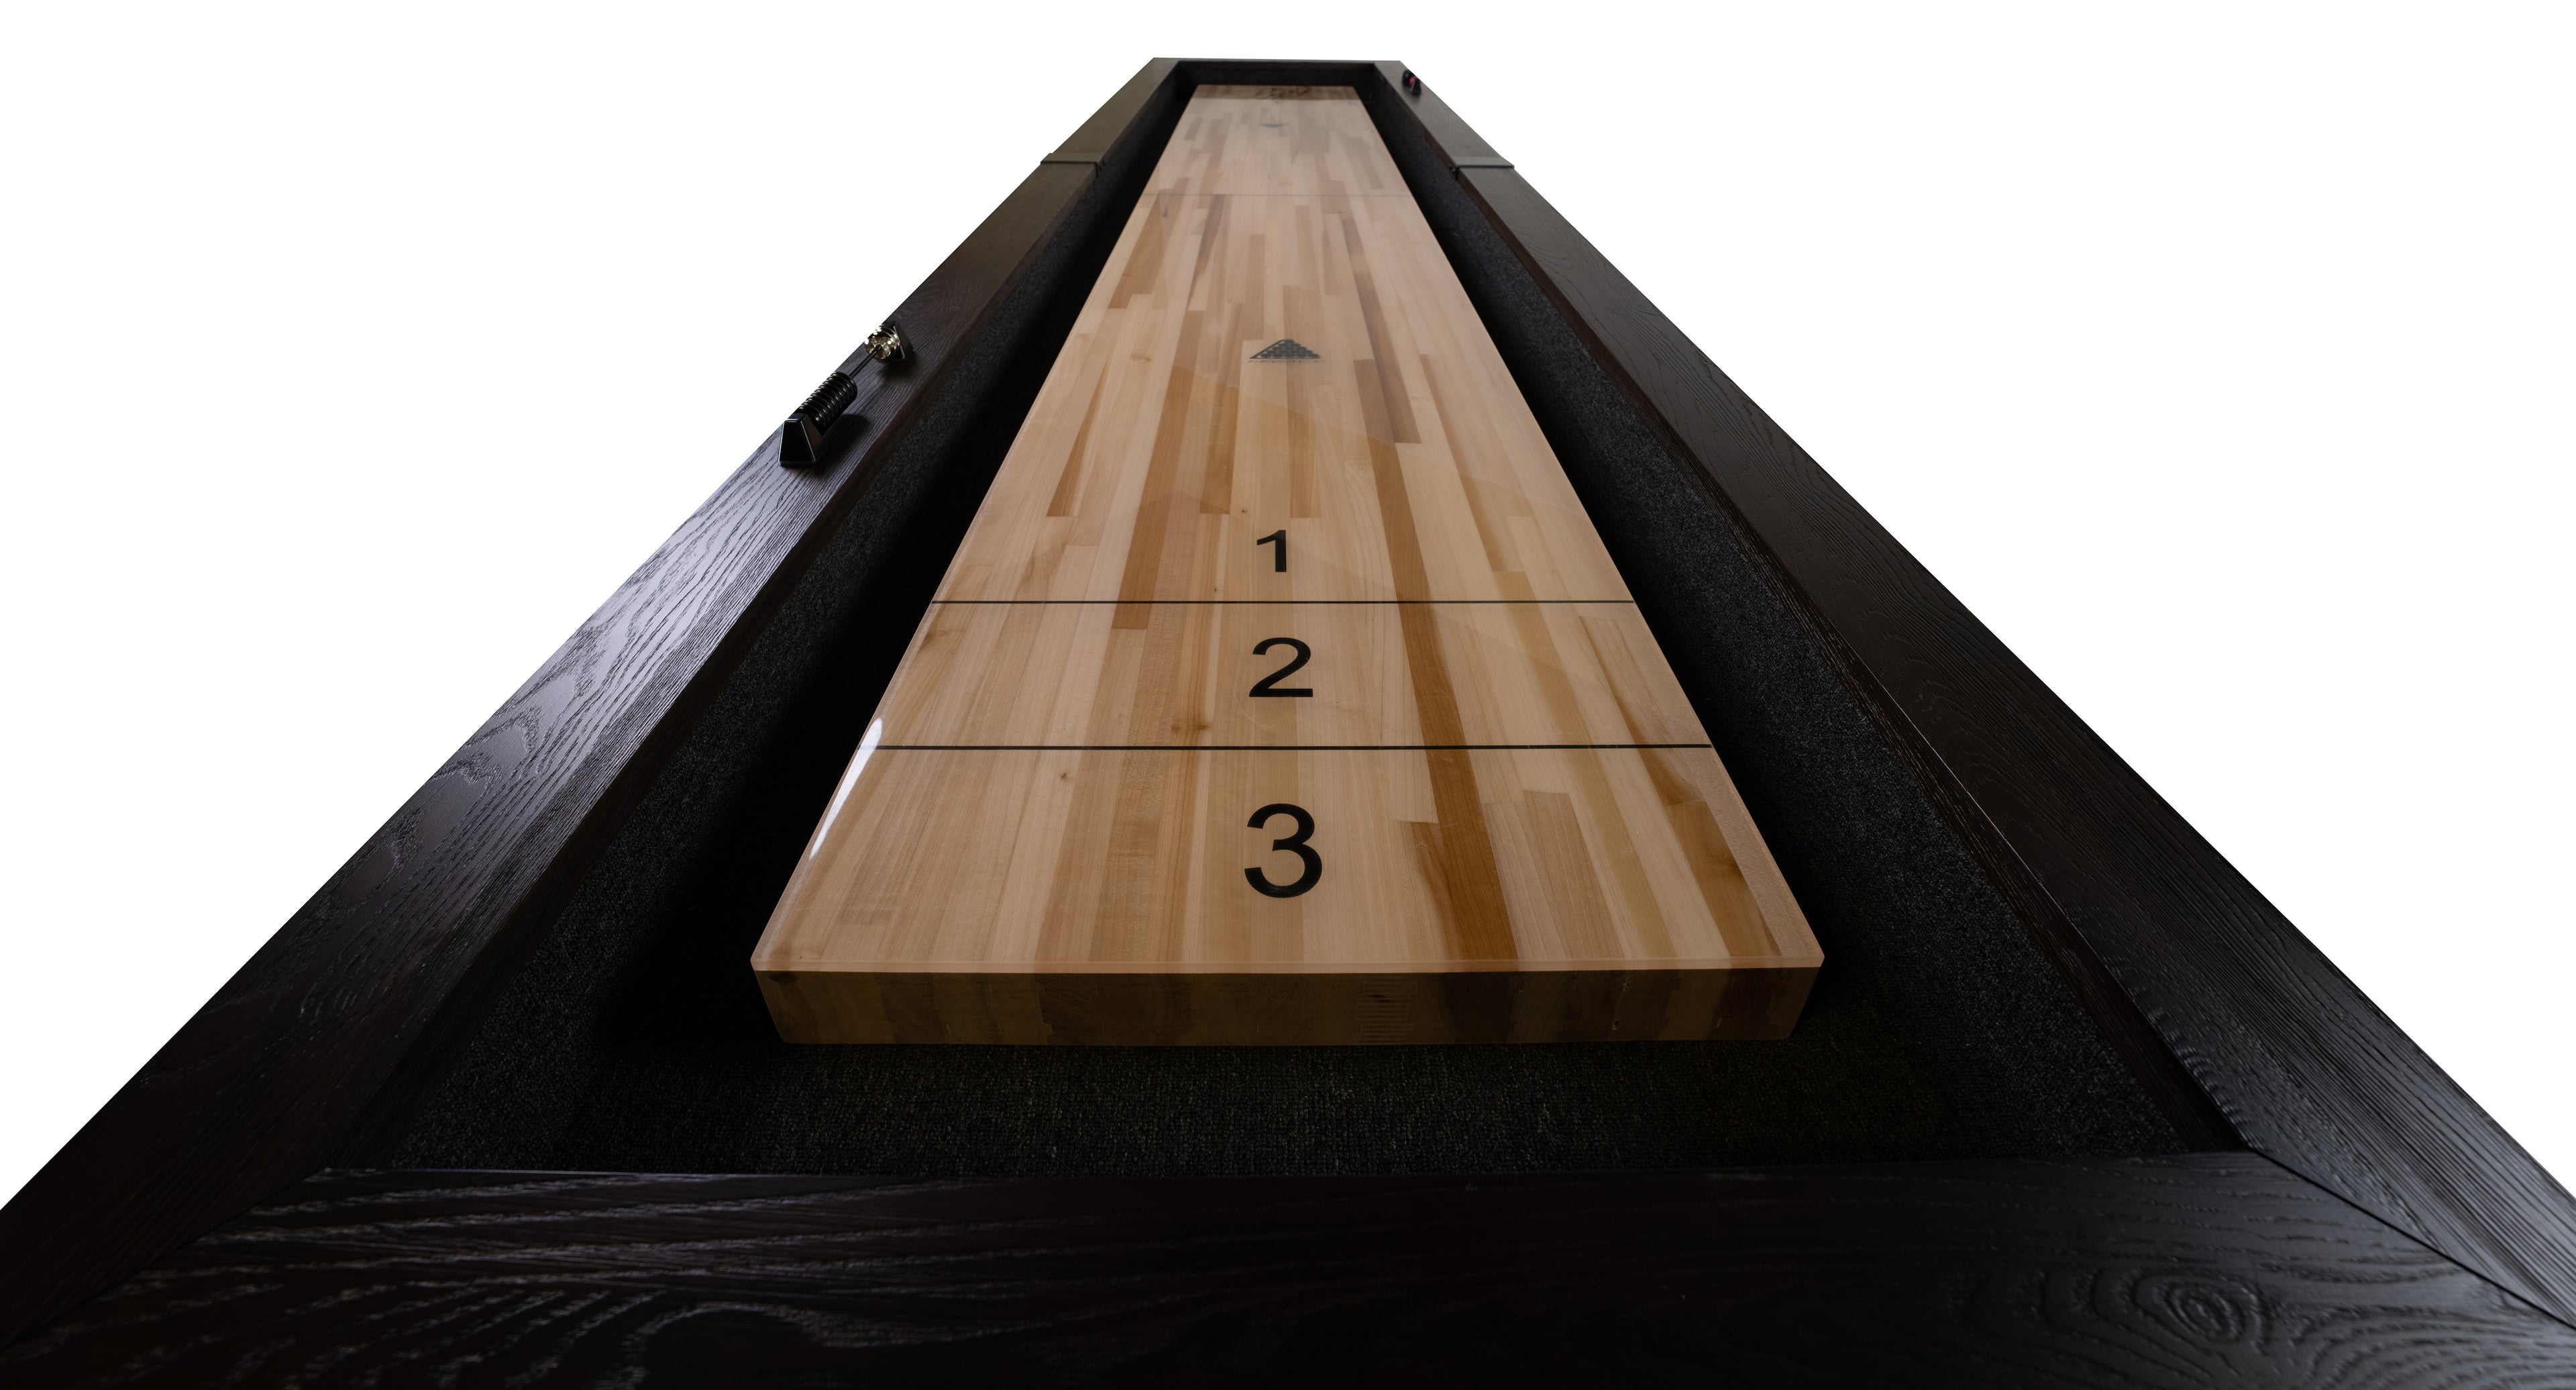 Legacy Billiards 14 Ft Barren Shuffleboard in Whiskey Barren Finish - End View Closeup